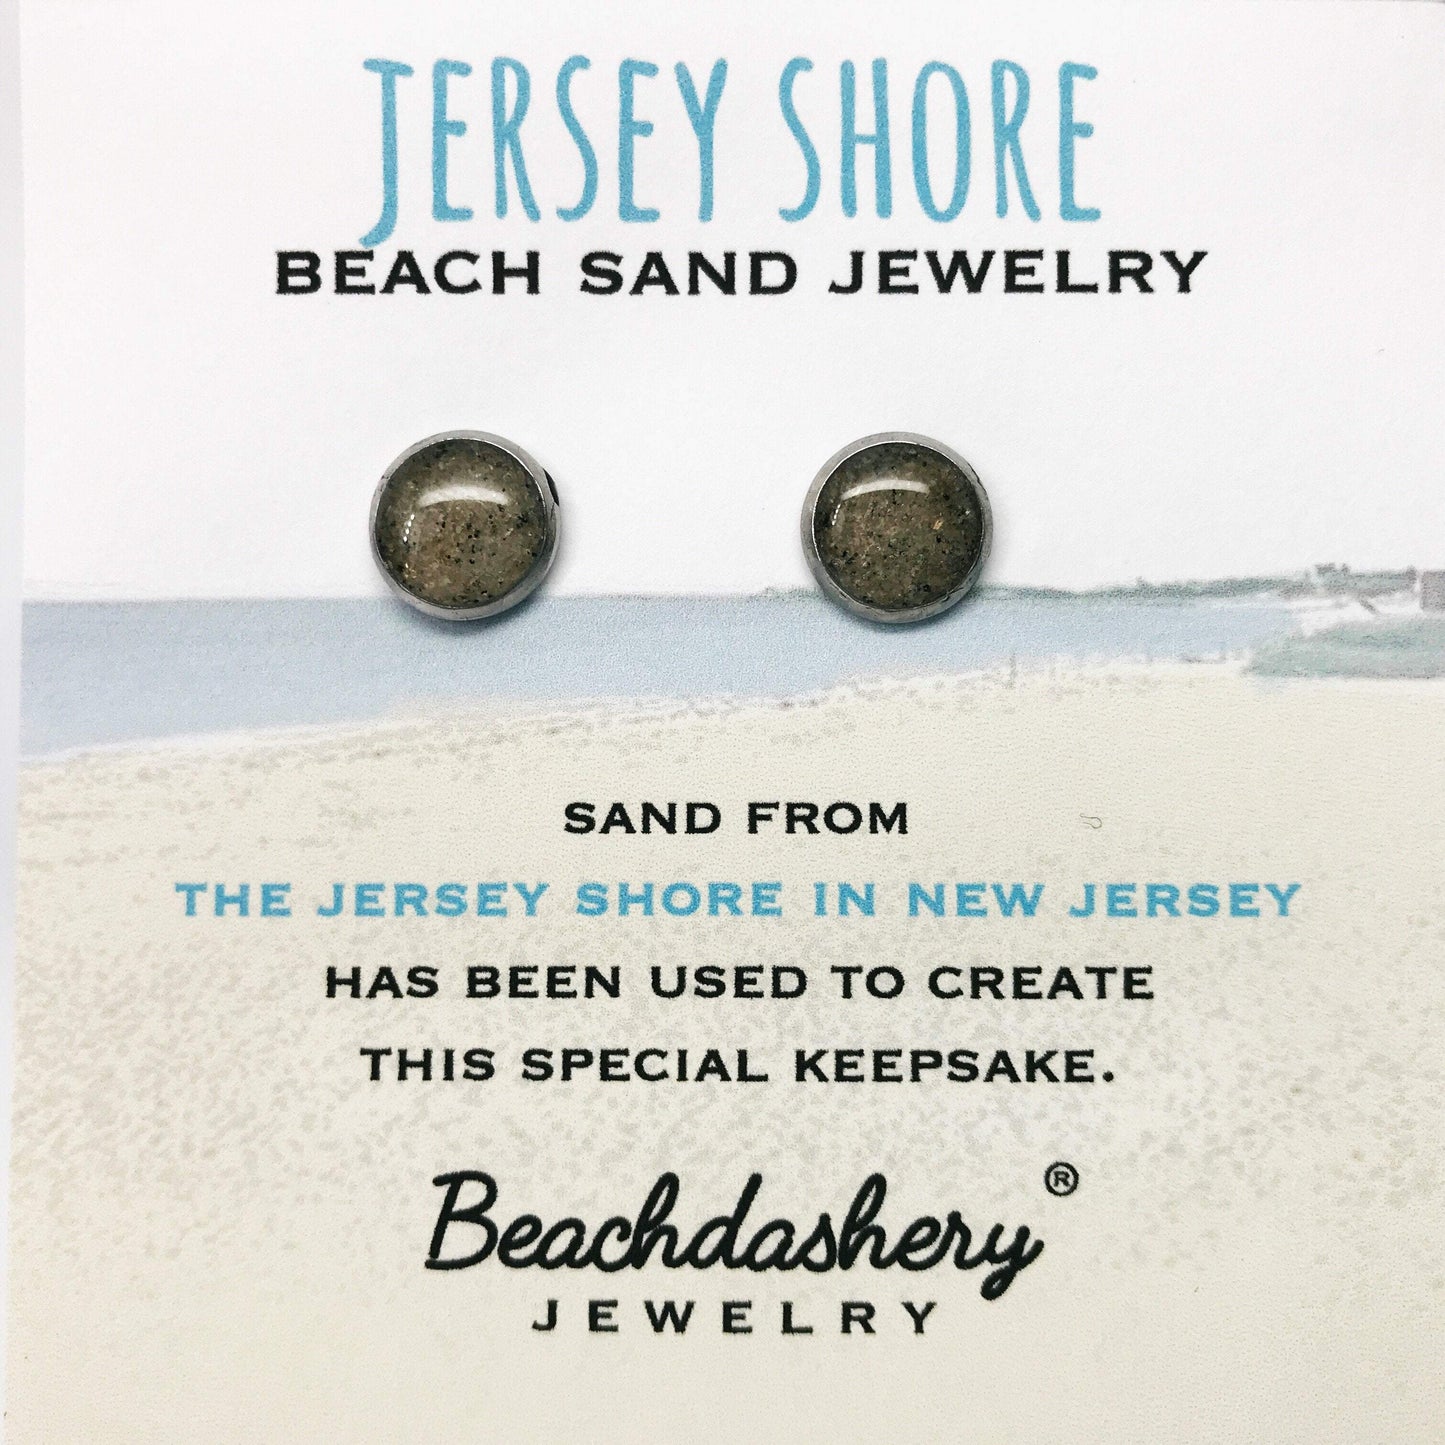 Load image into Gallery viewer, Jersey Shore Beach New Jersey Sand Jewelry Beachdashery
